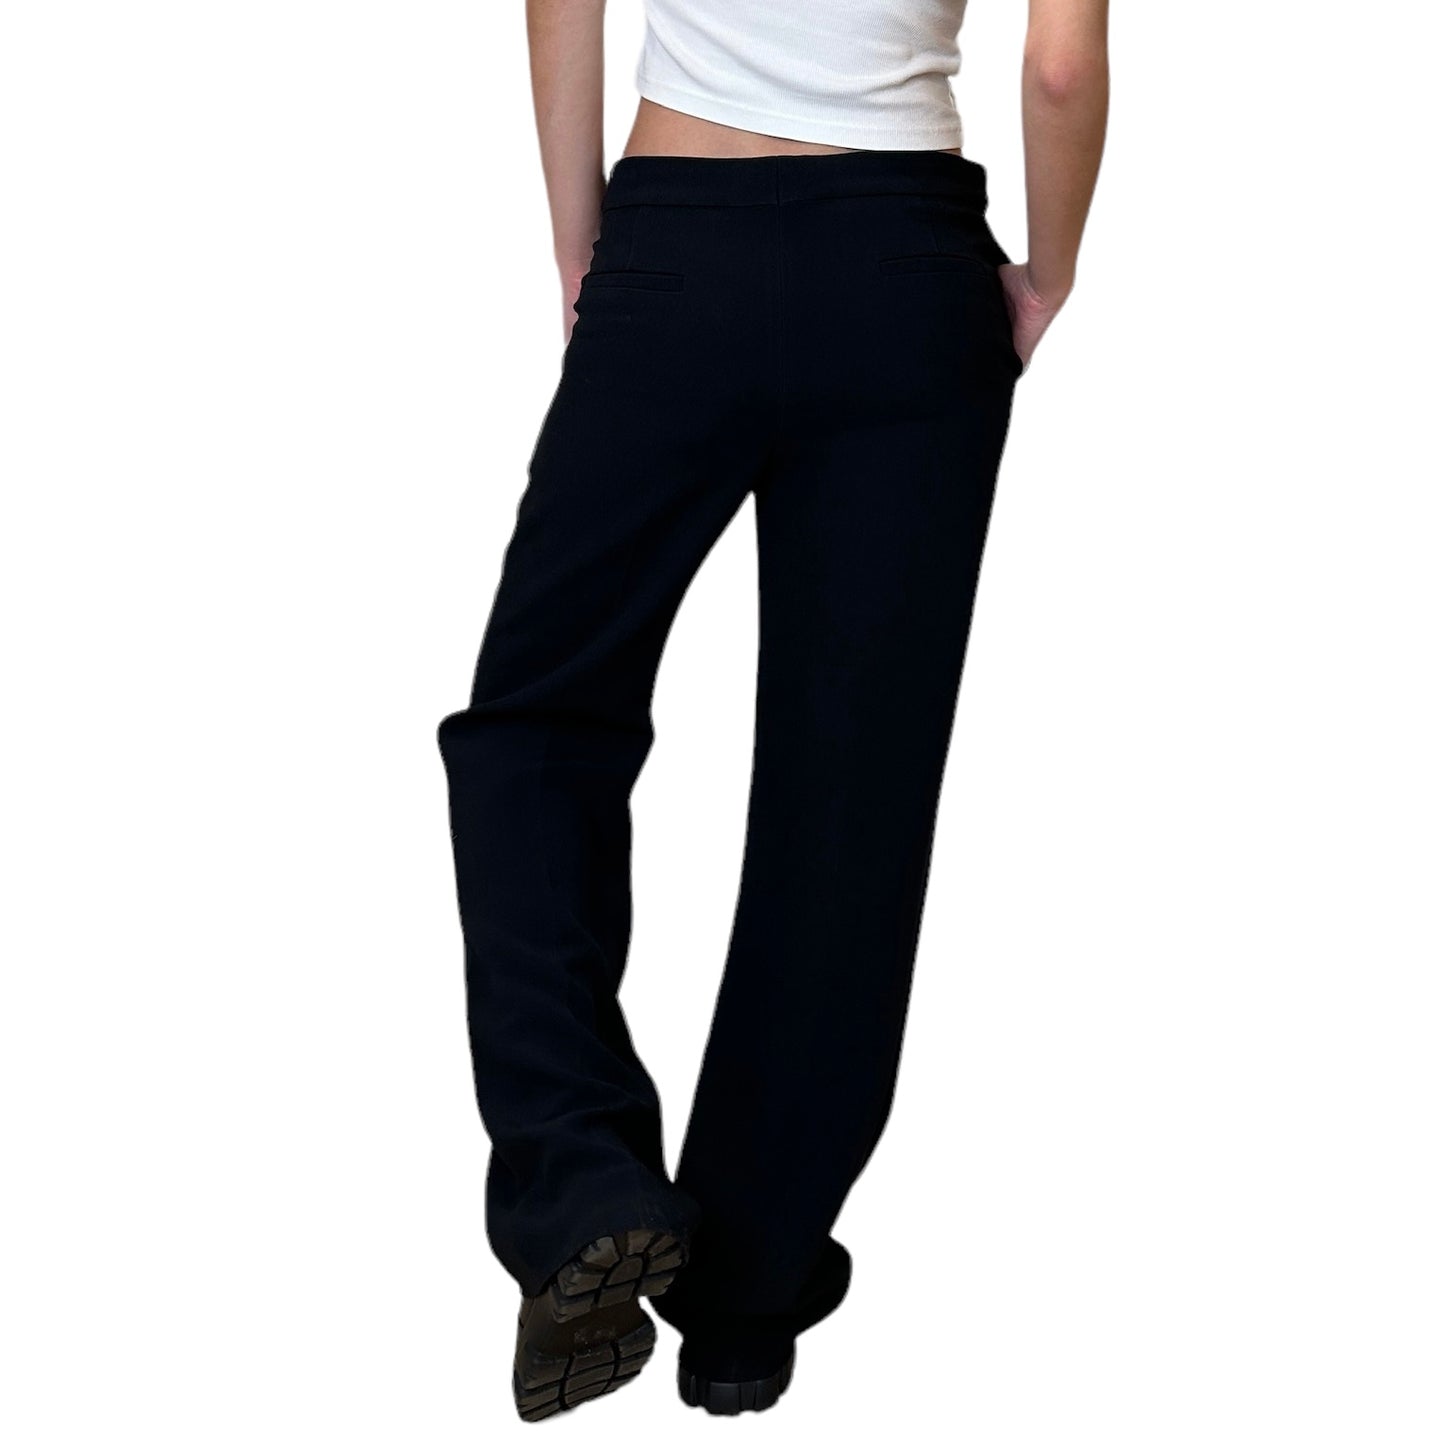 Black Low Waist Tailored Pants - XS